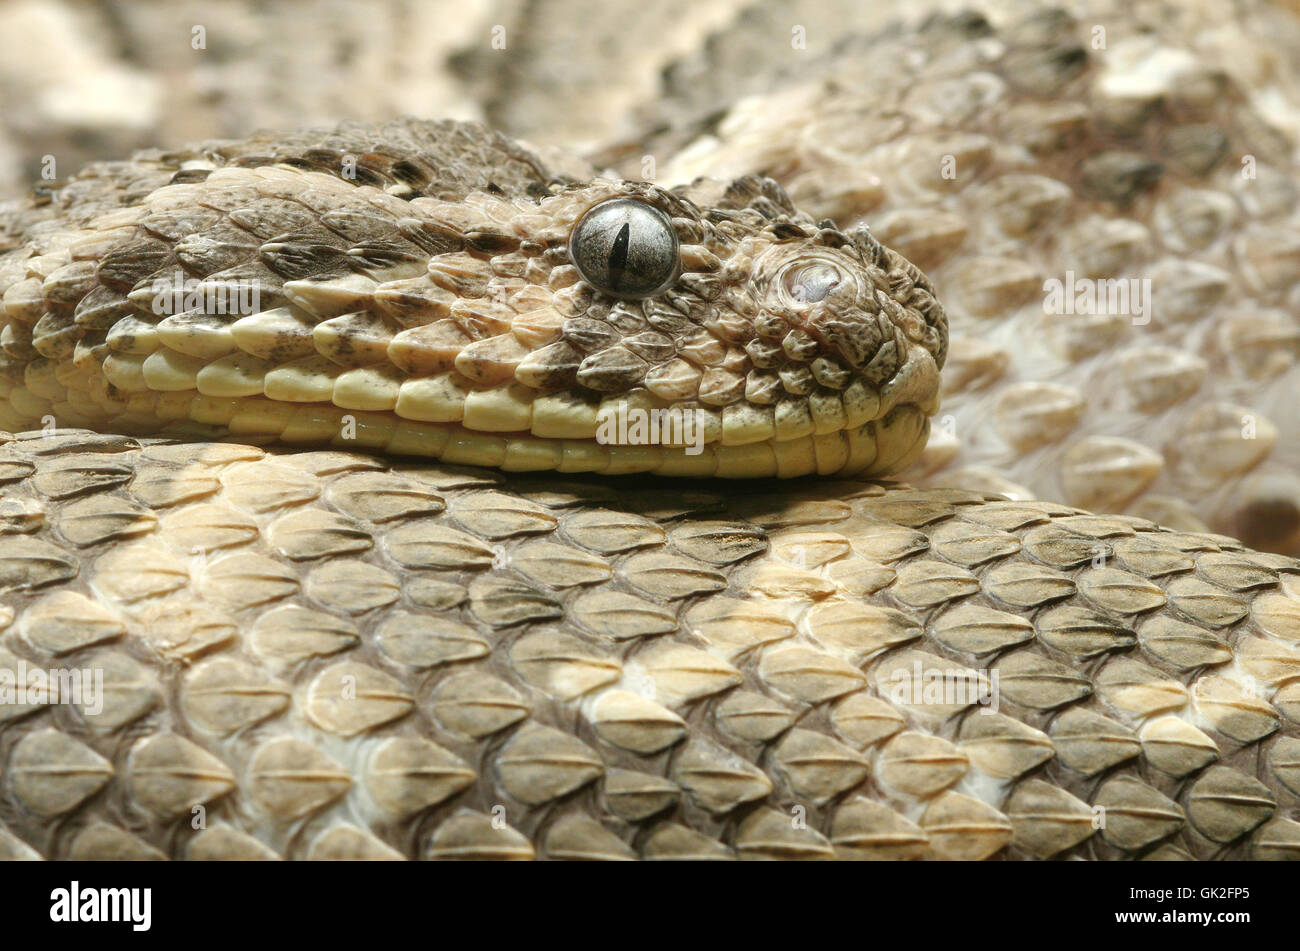 terrarium snake vipers Stock Photo